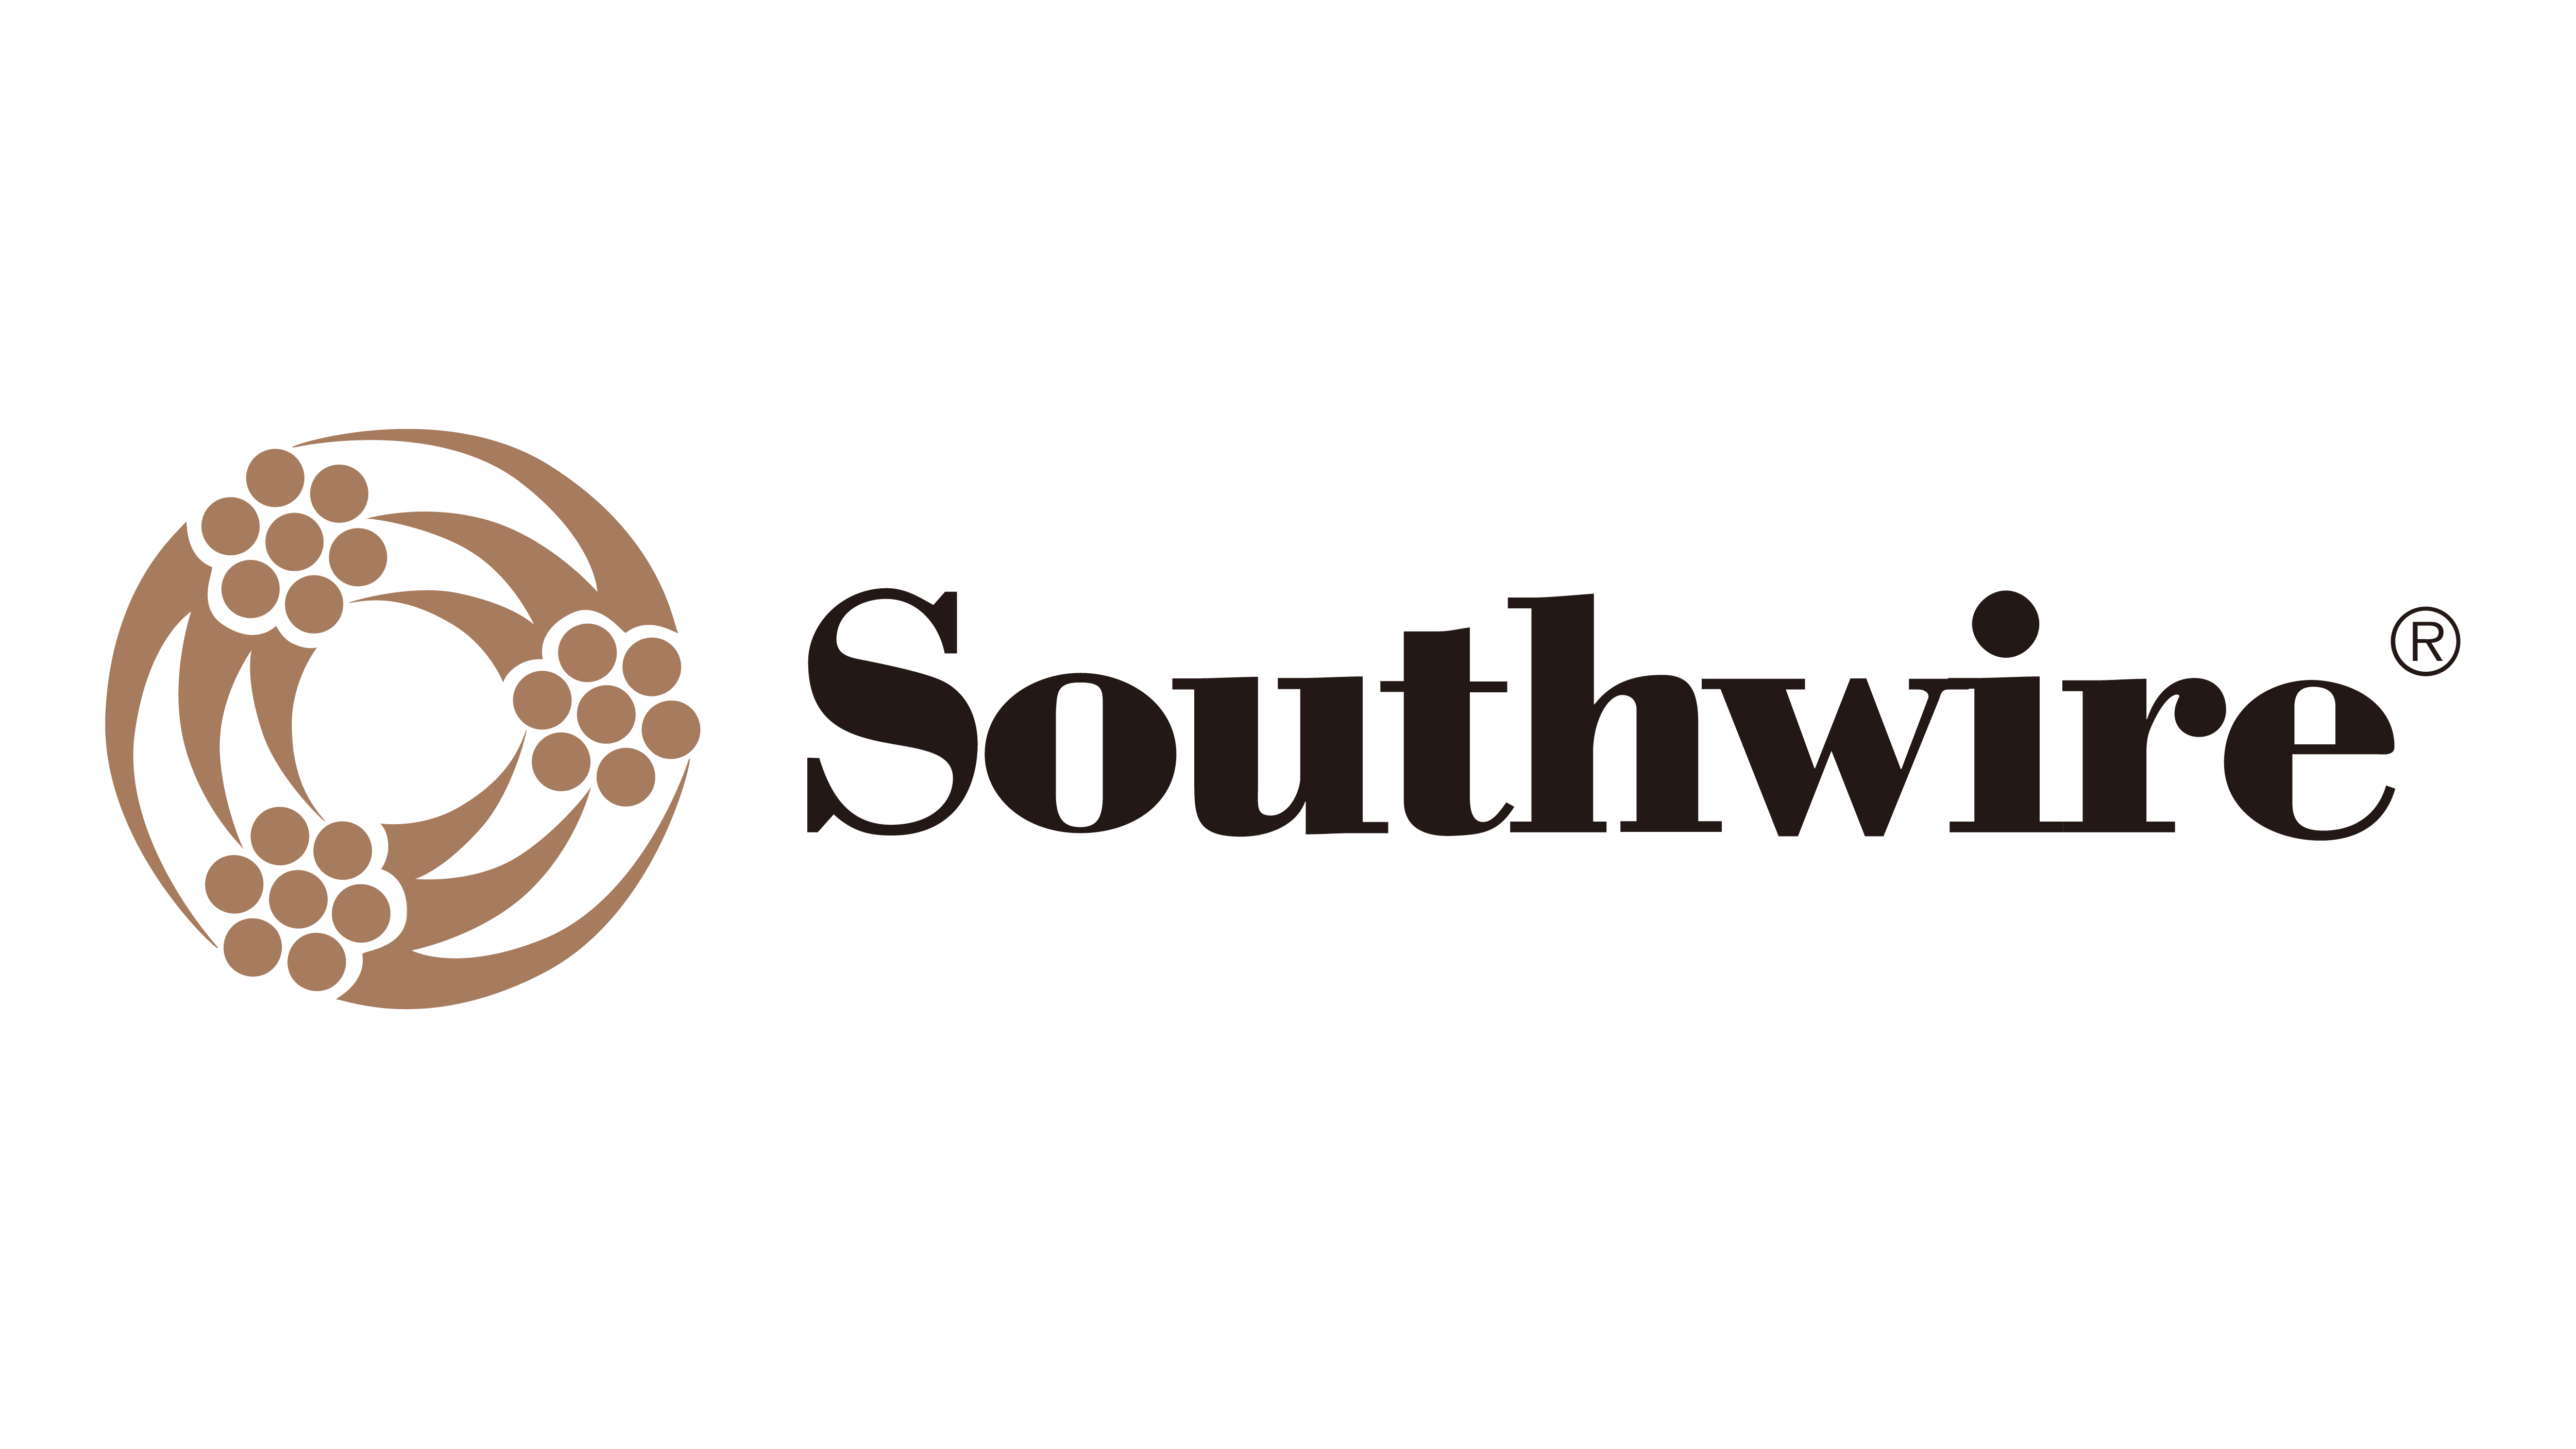 Southwire logo horizontal